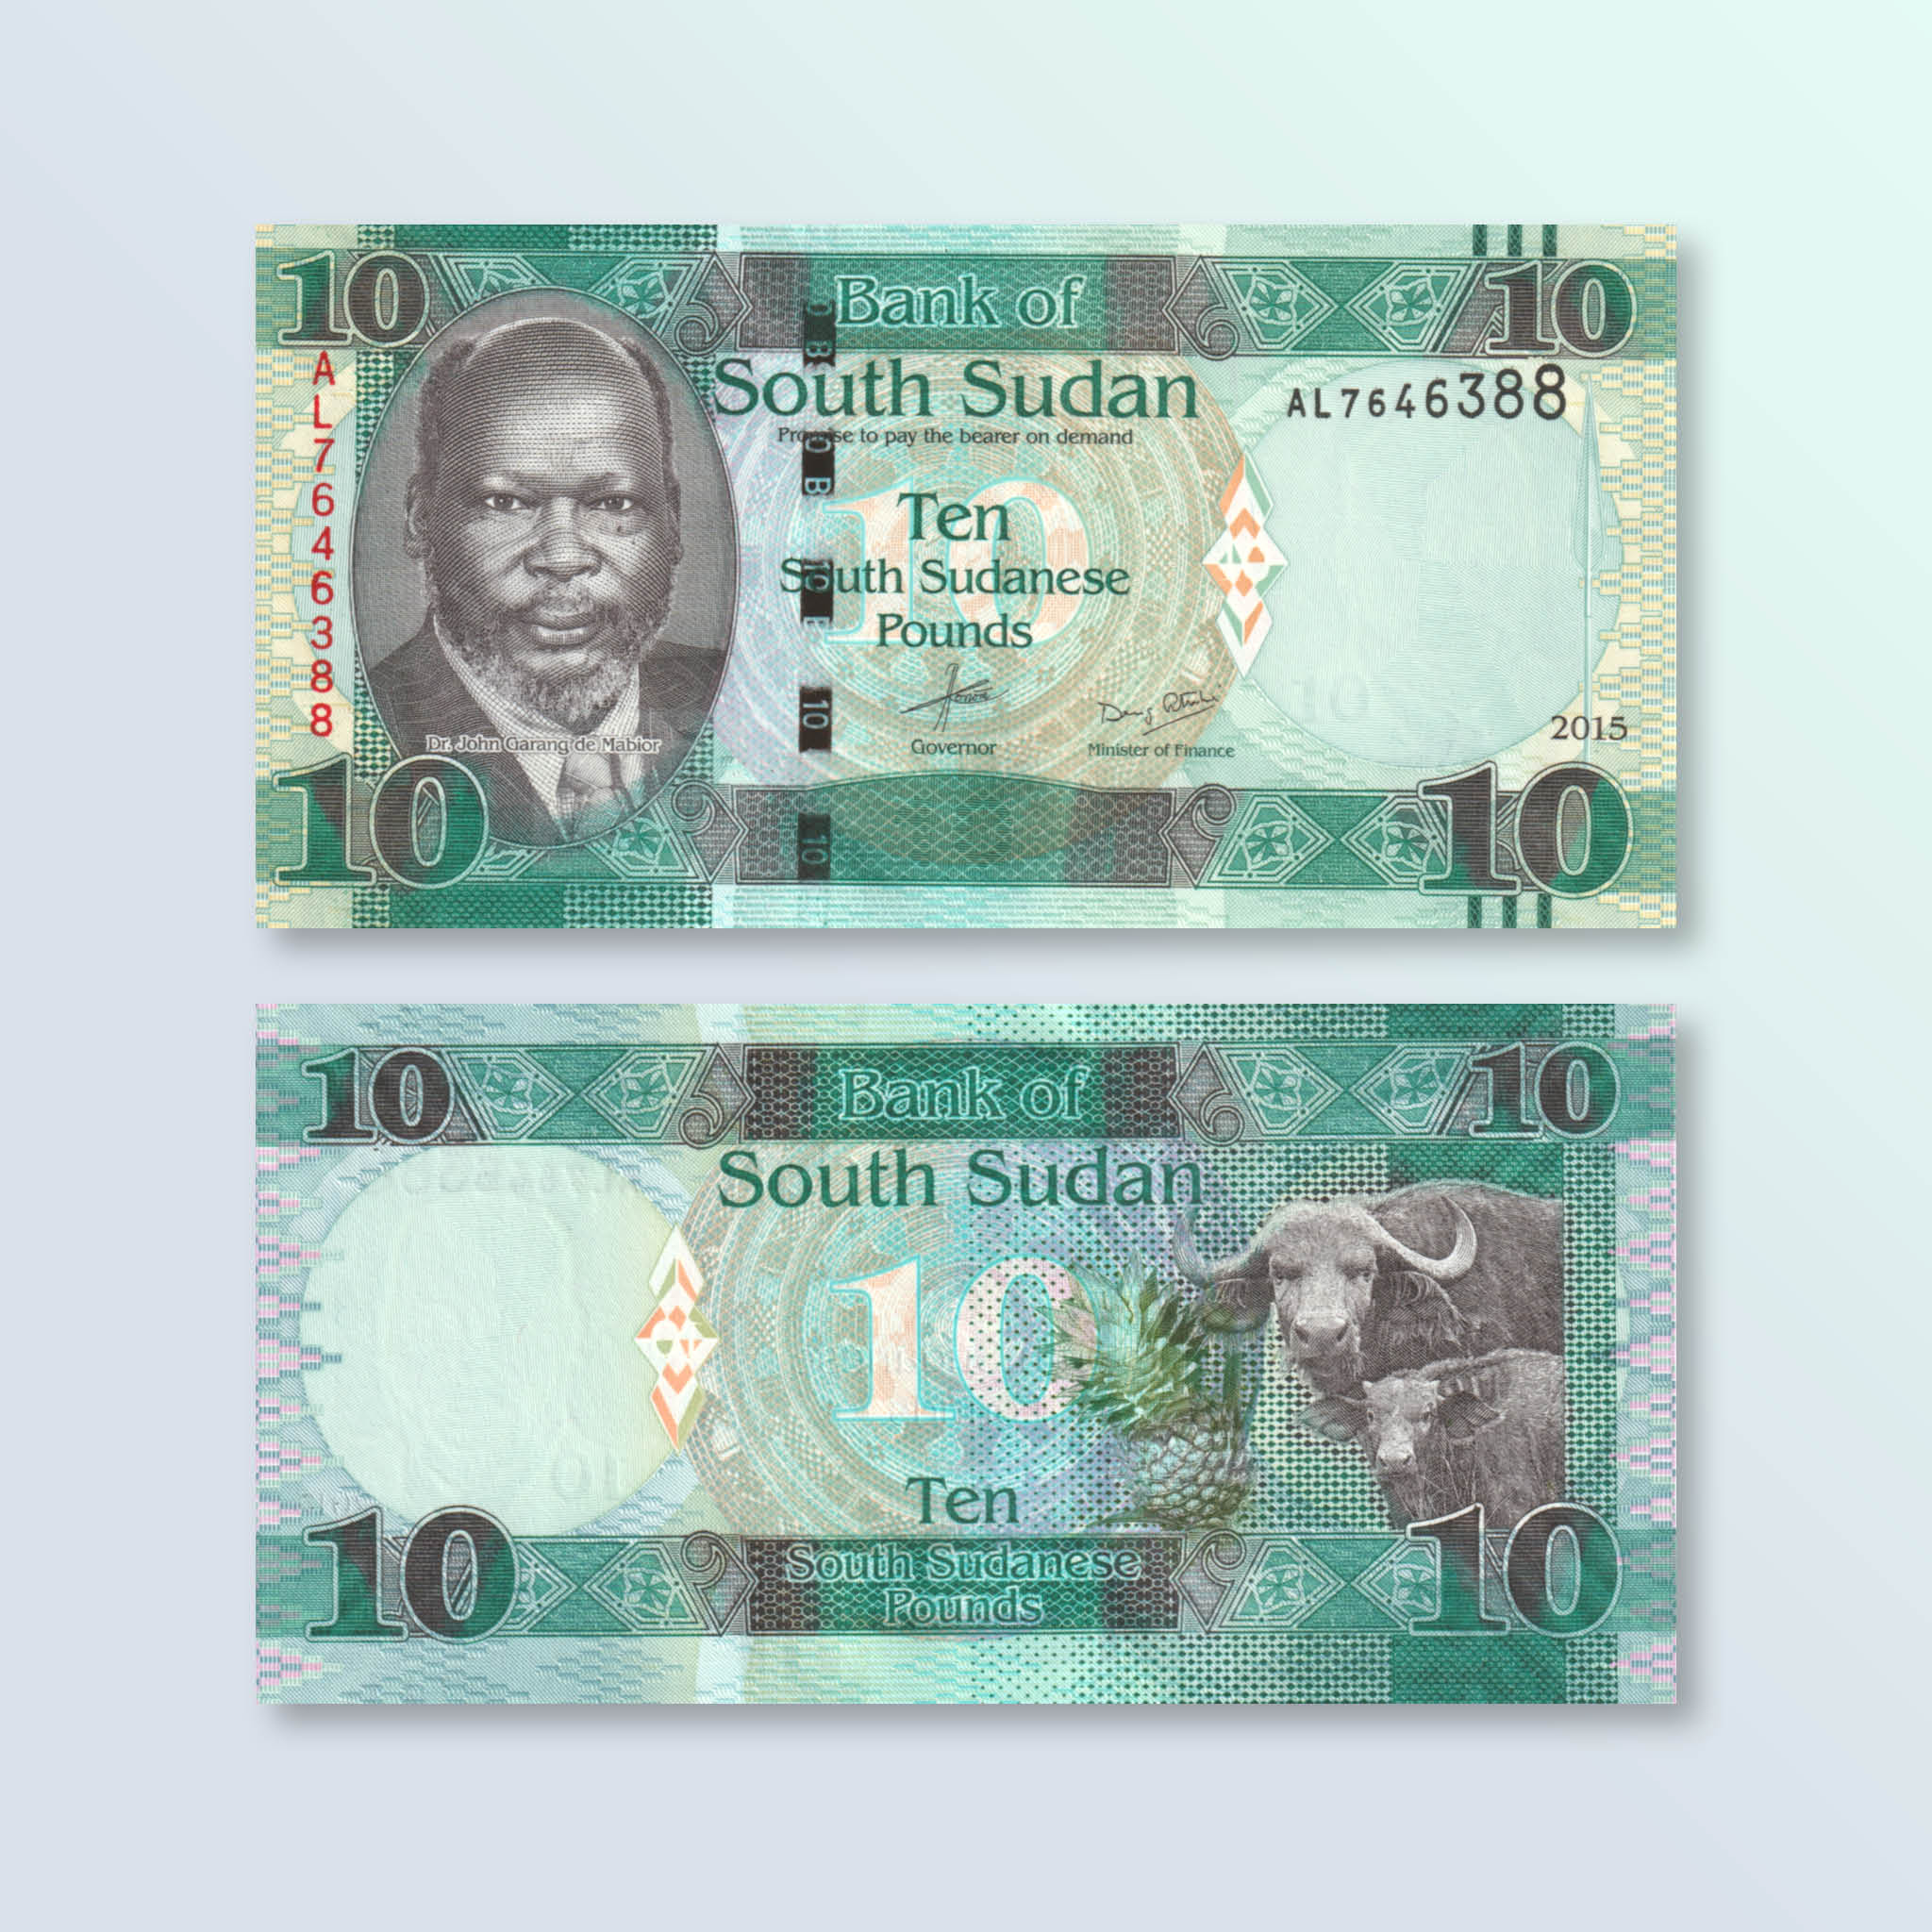 South Sudan 10 Pounds, 2015, B112a, P12a, UNC